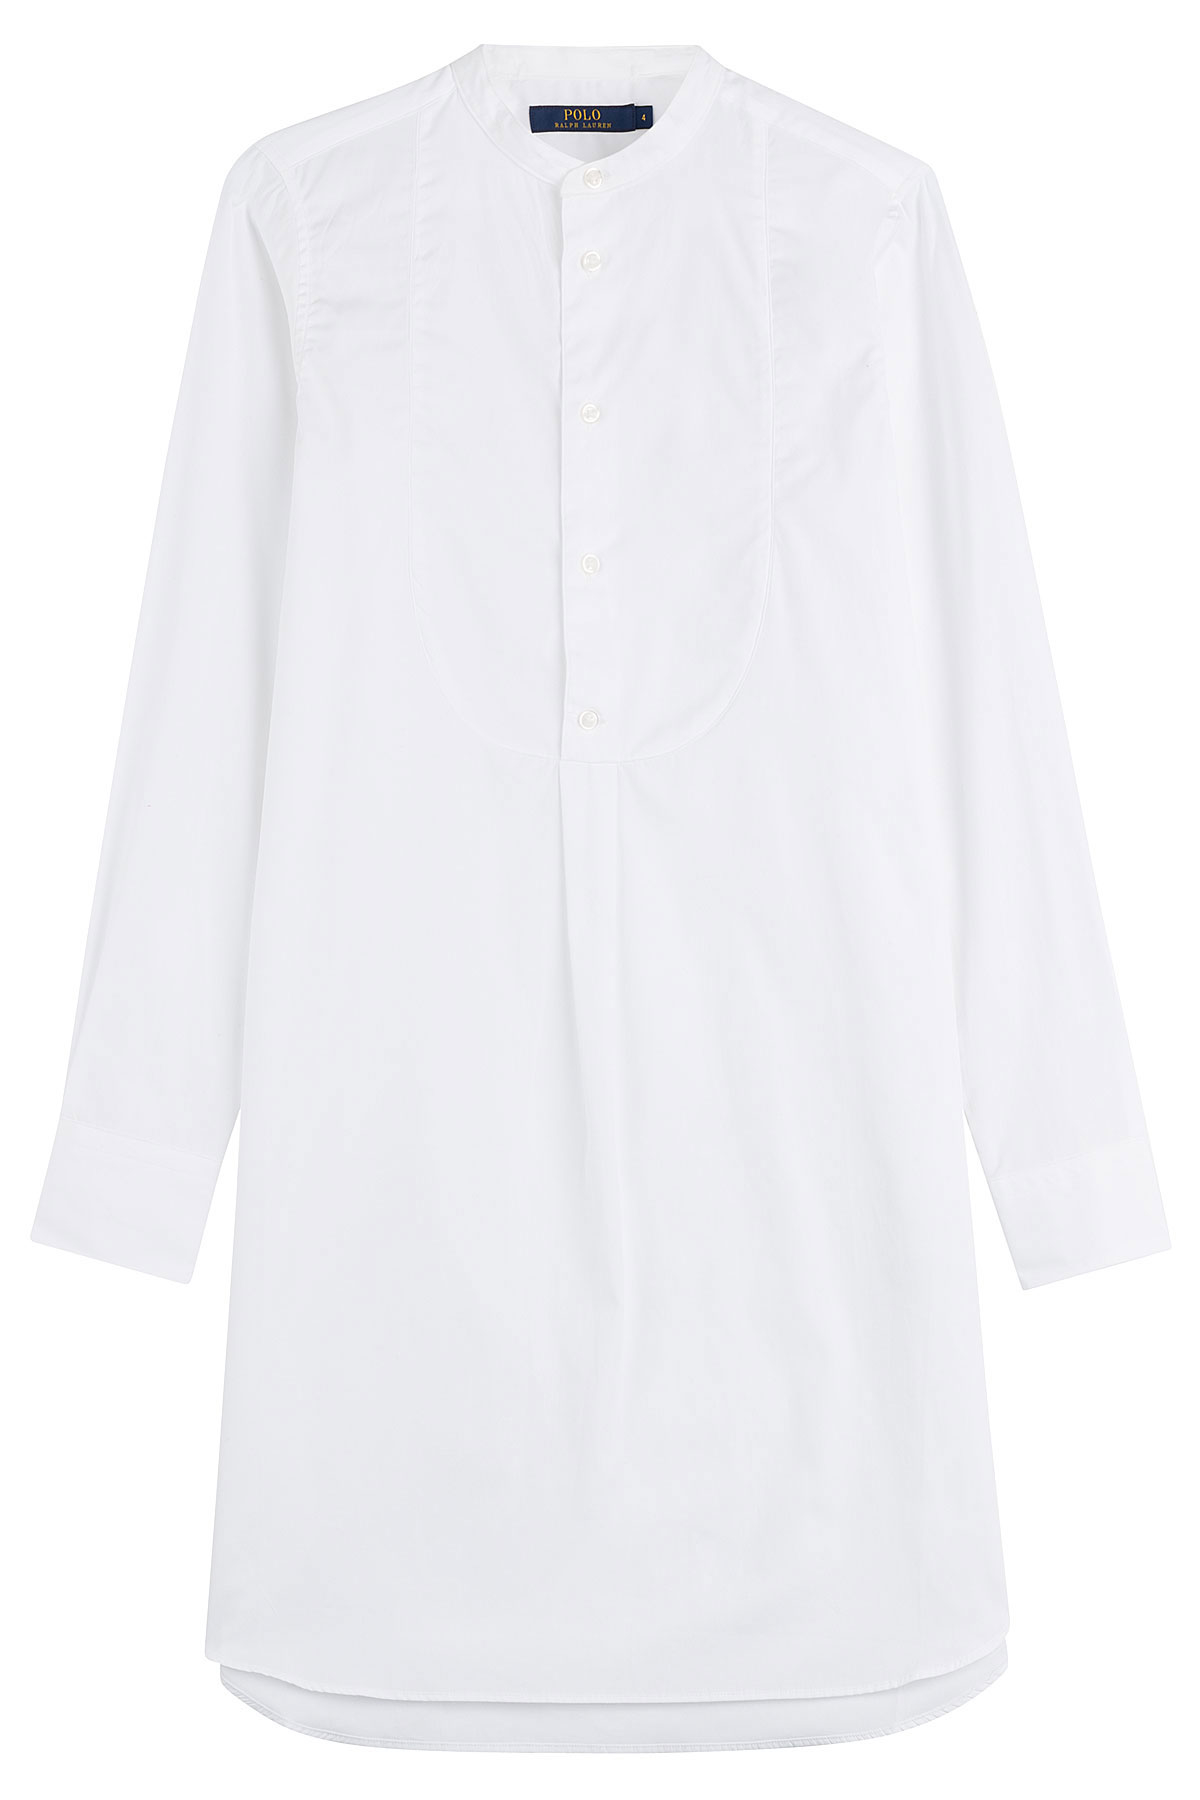 Lyst Polo Ralph  Lauren  Cotton Shirt  Dress  White  in White 